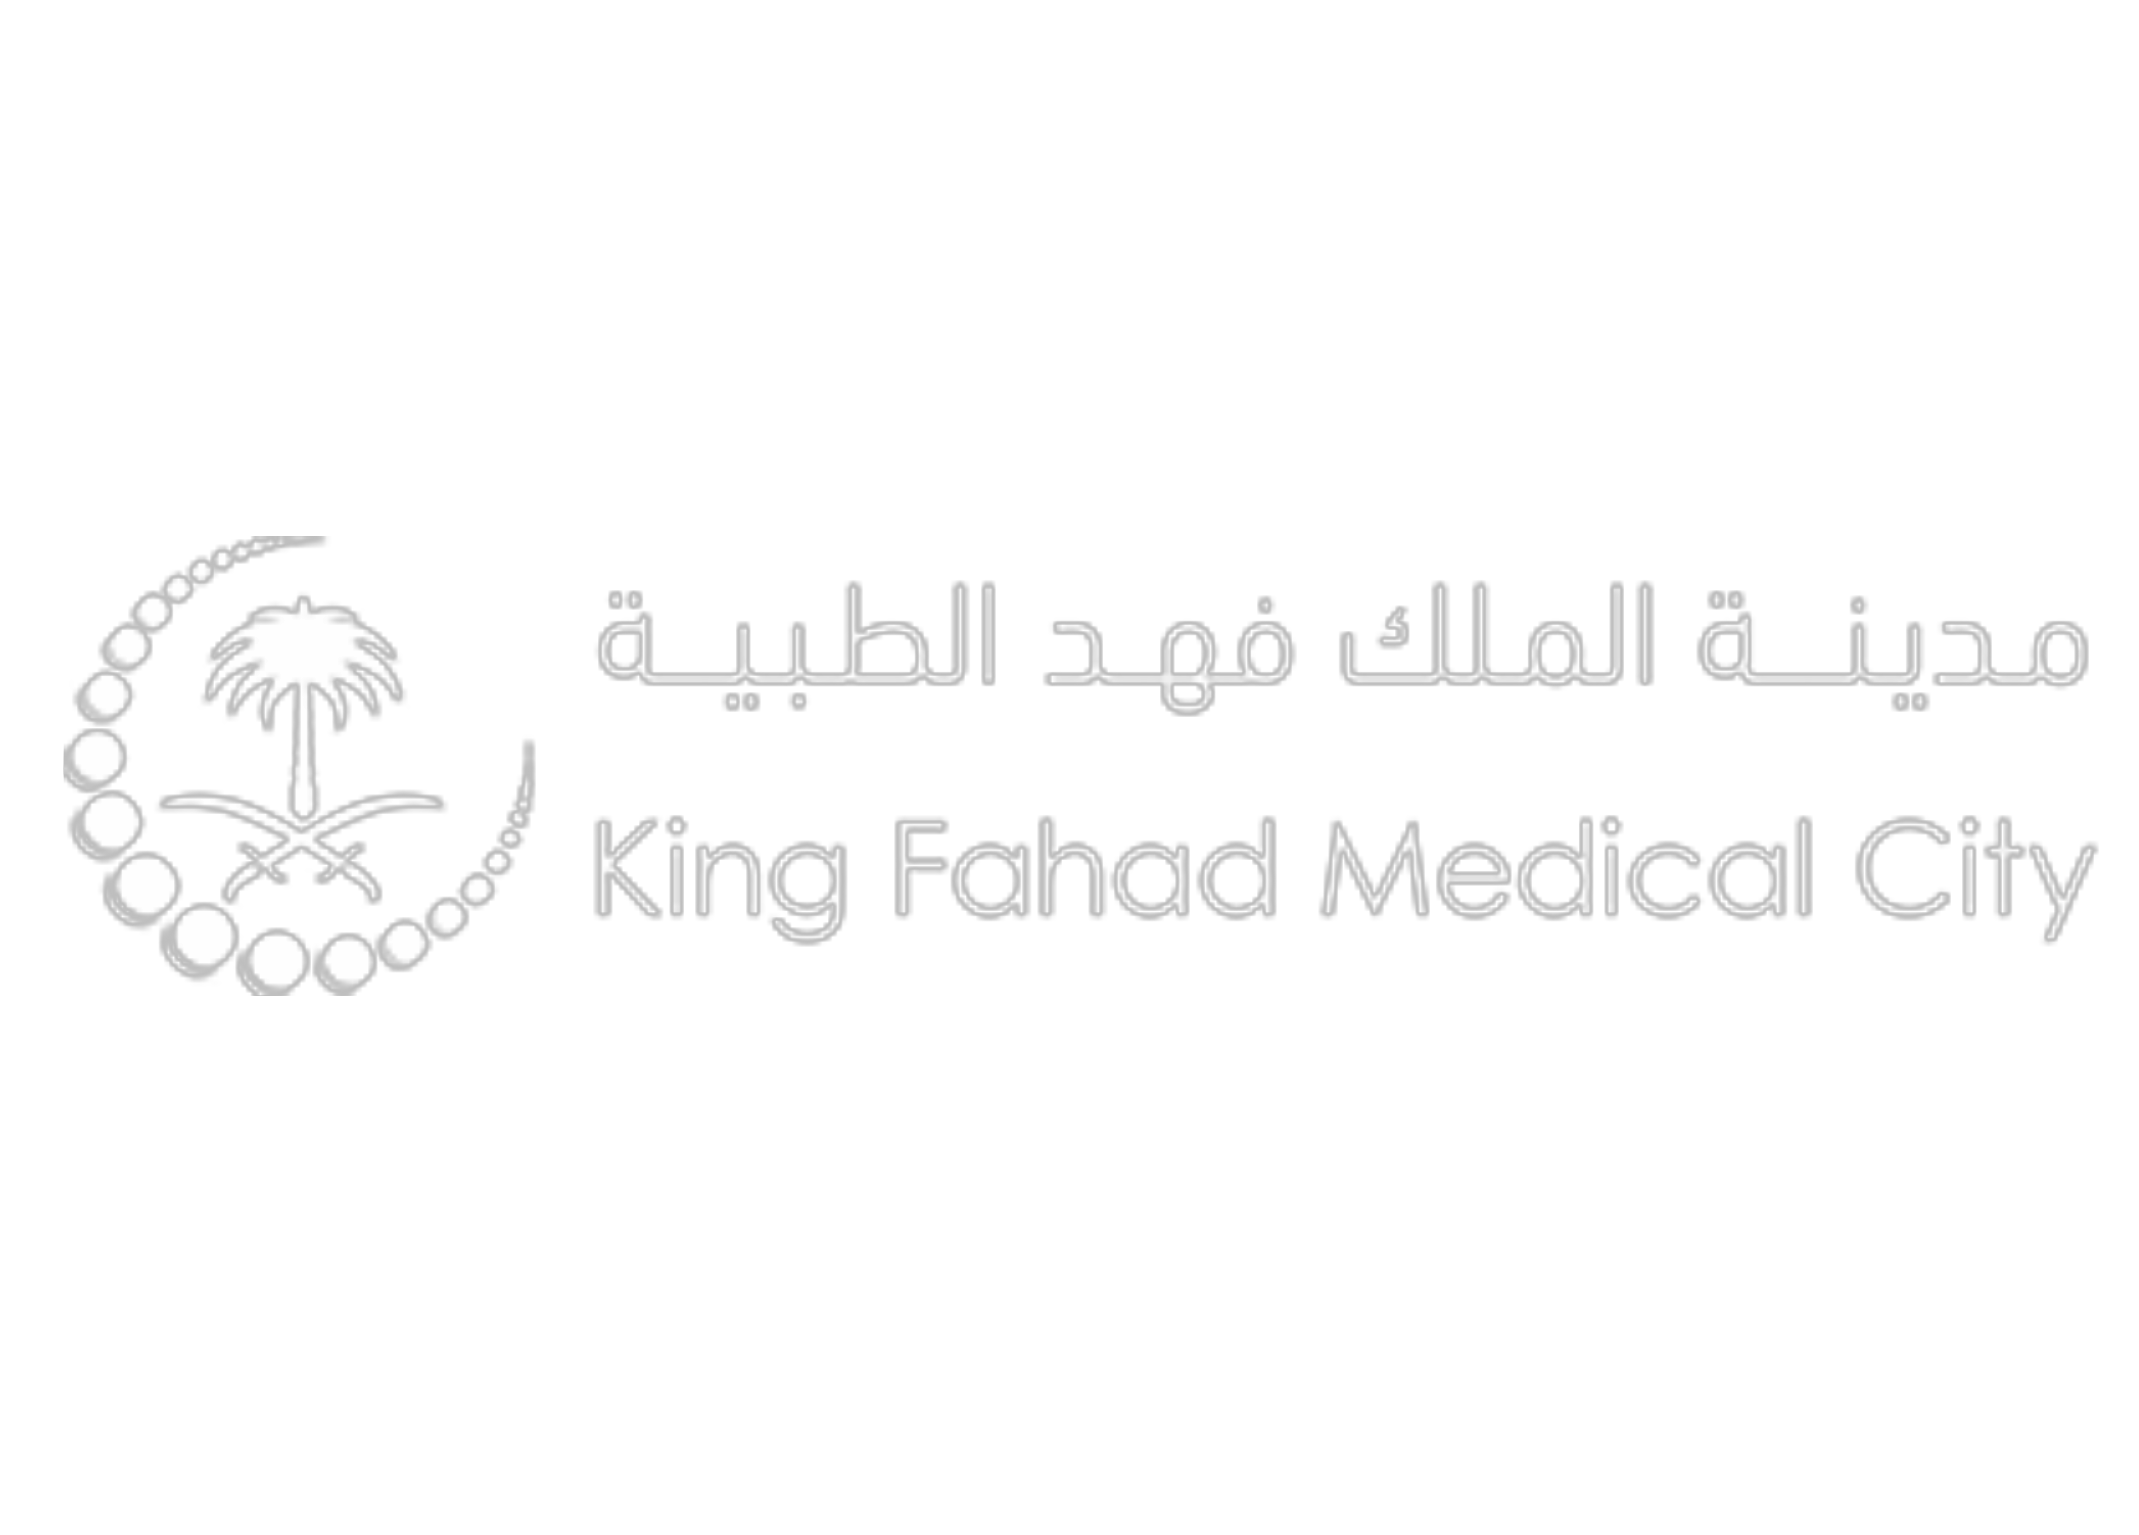 KFMC logo